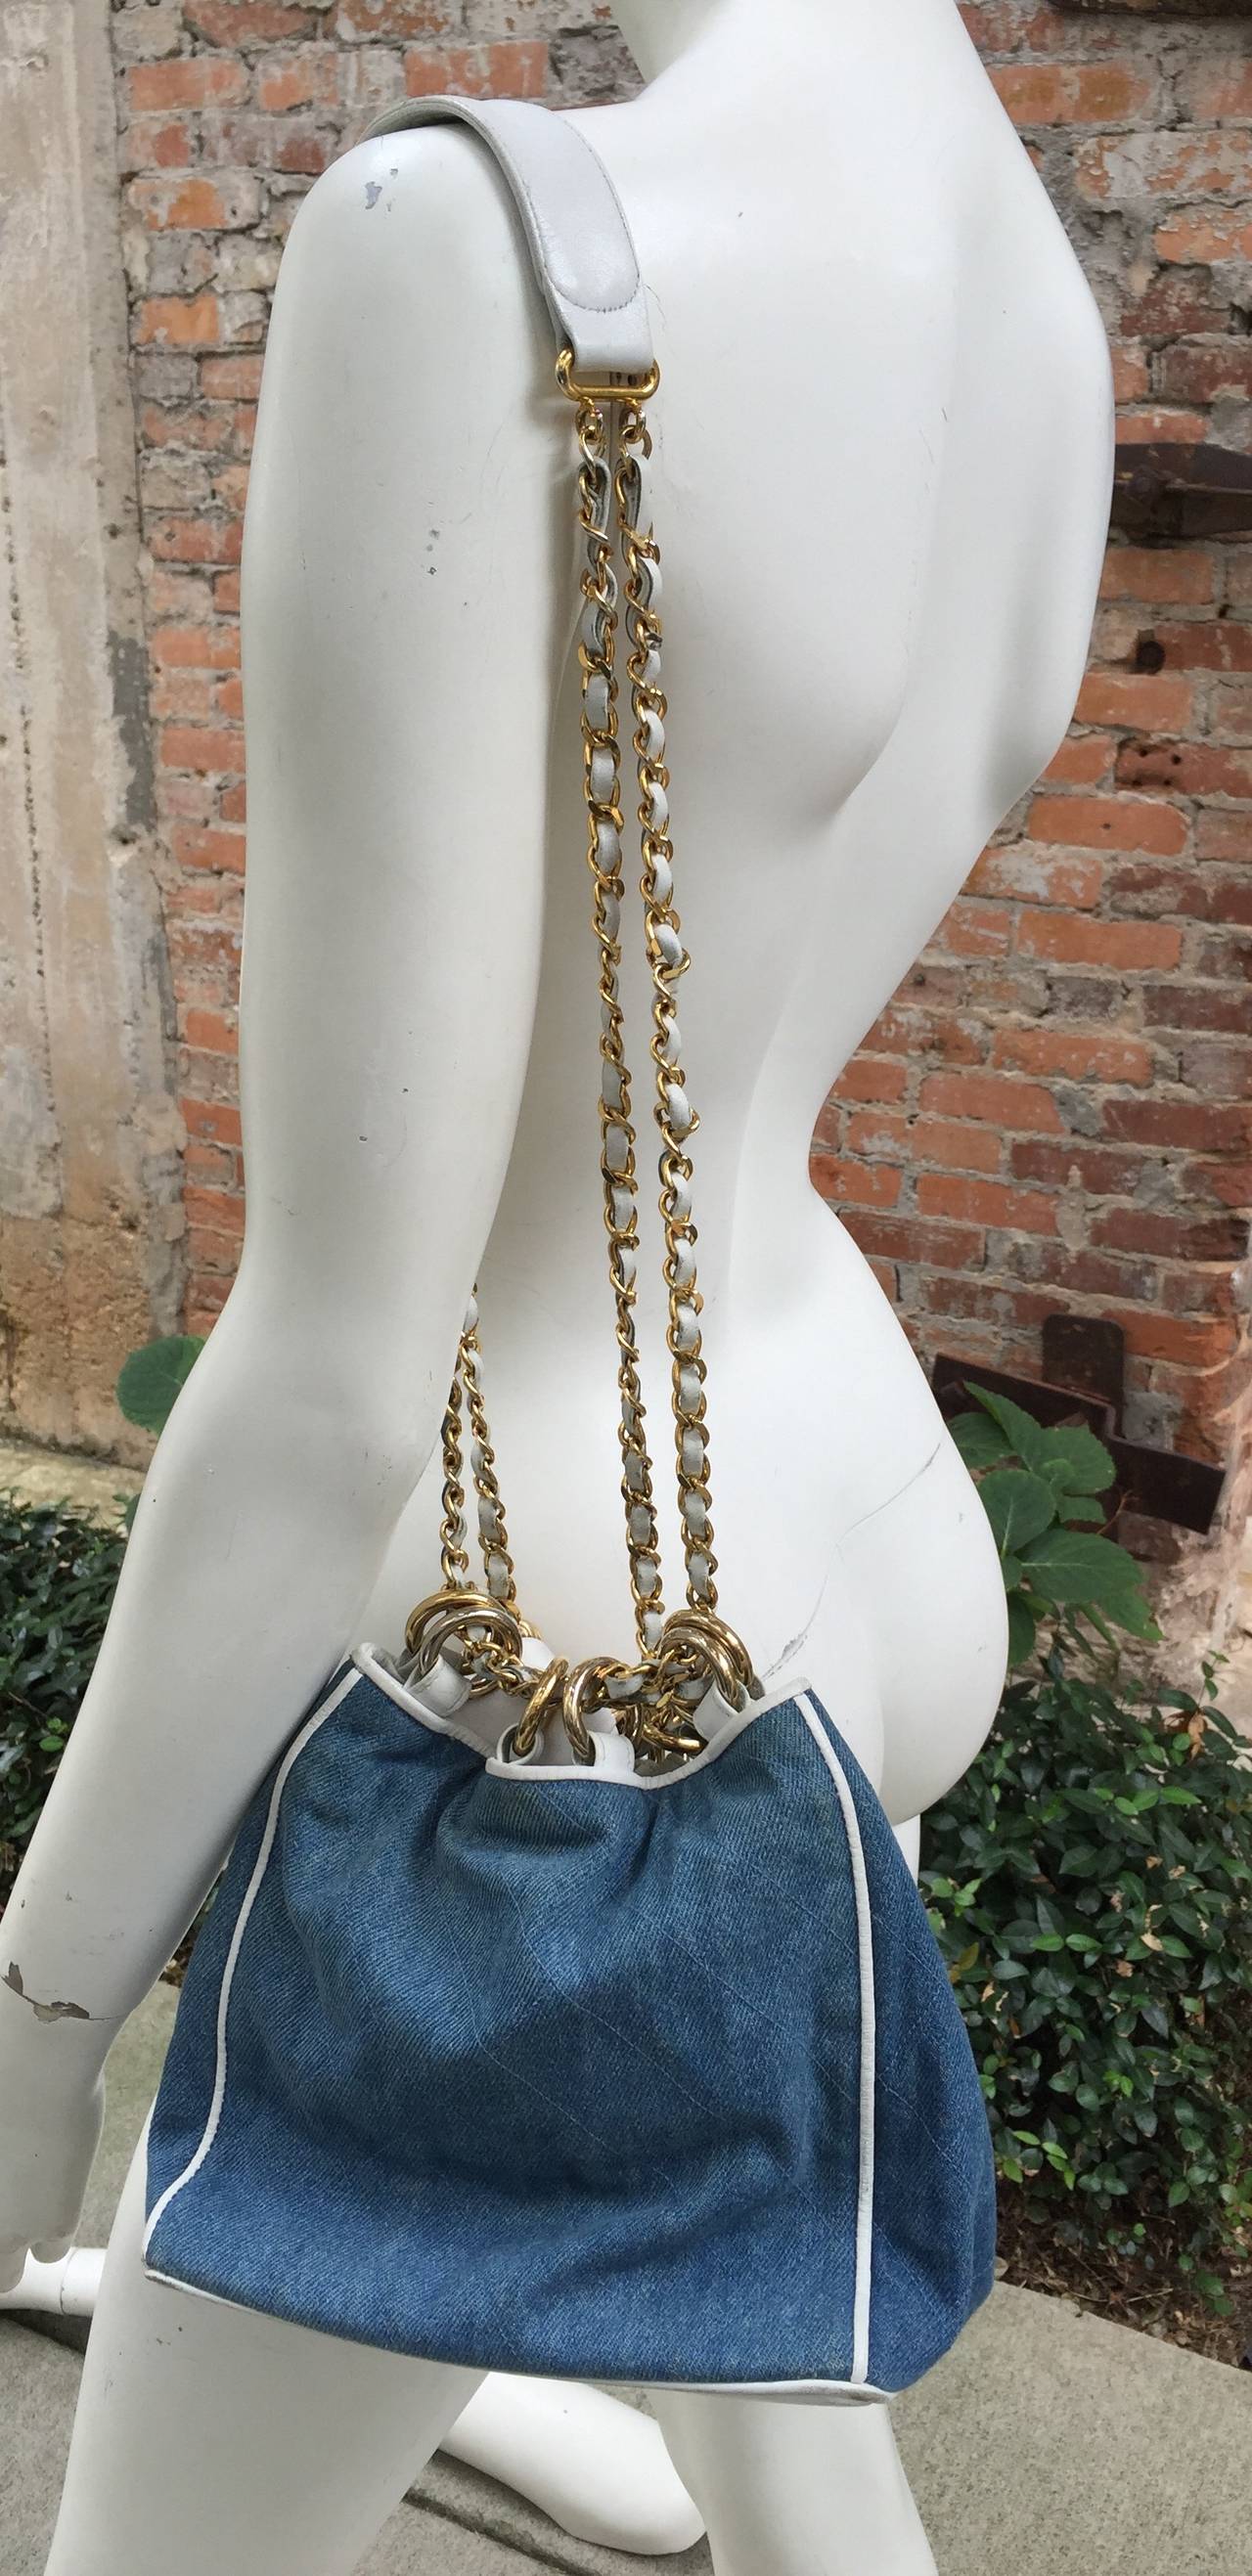 Chanel denim white leather trim shoulder handbag. 4